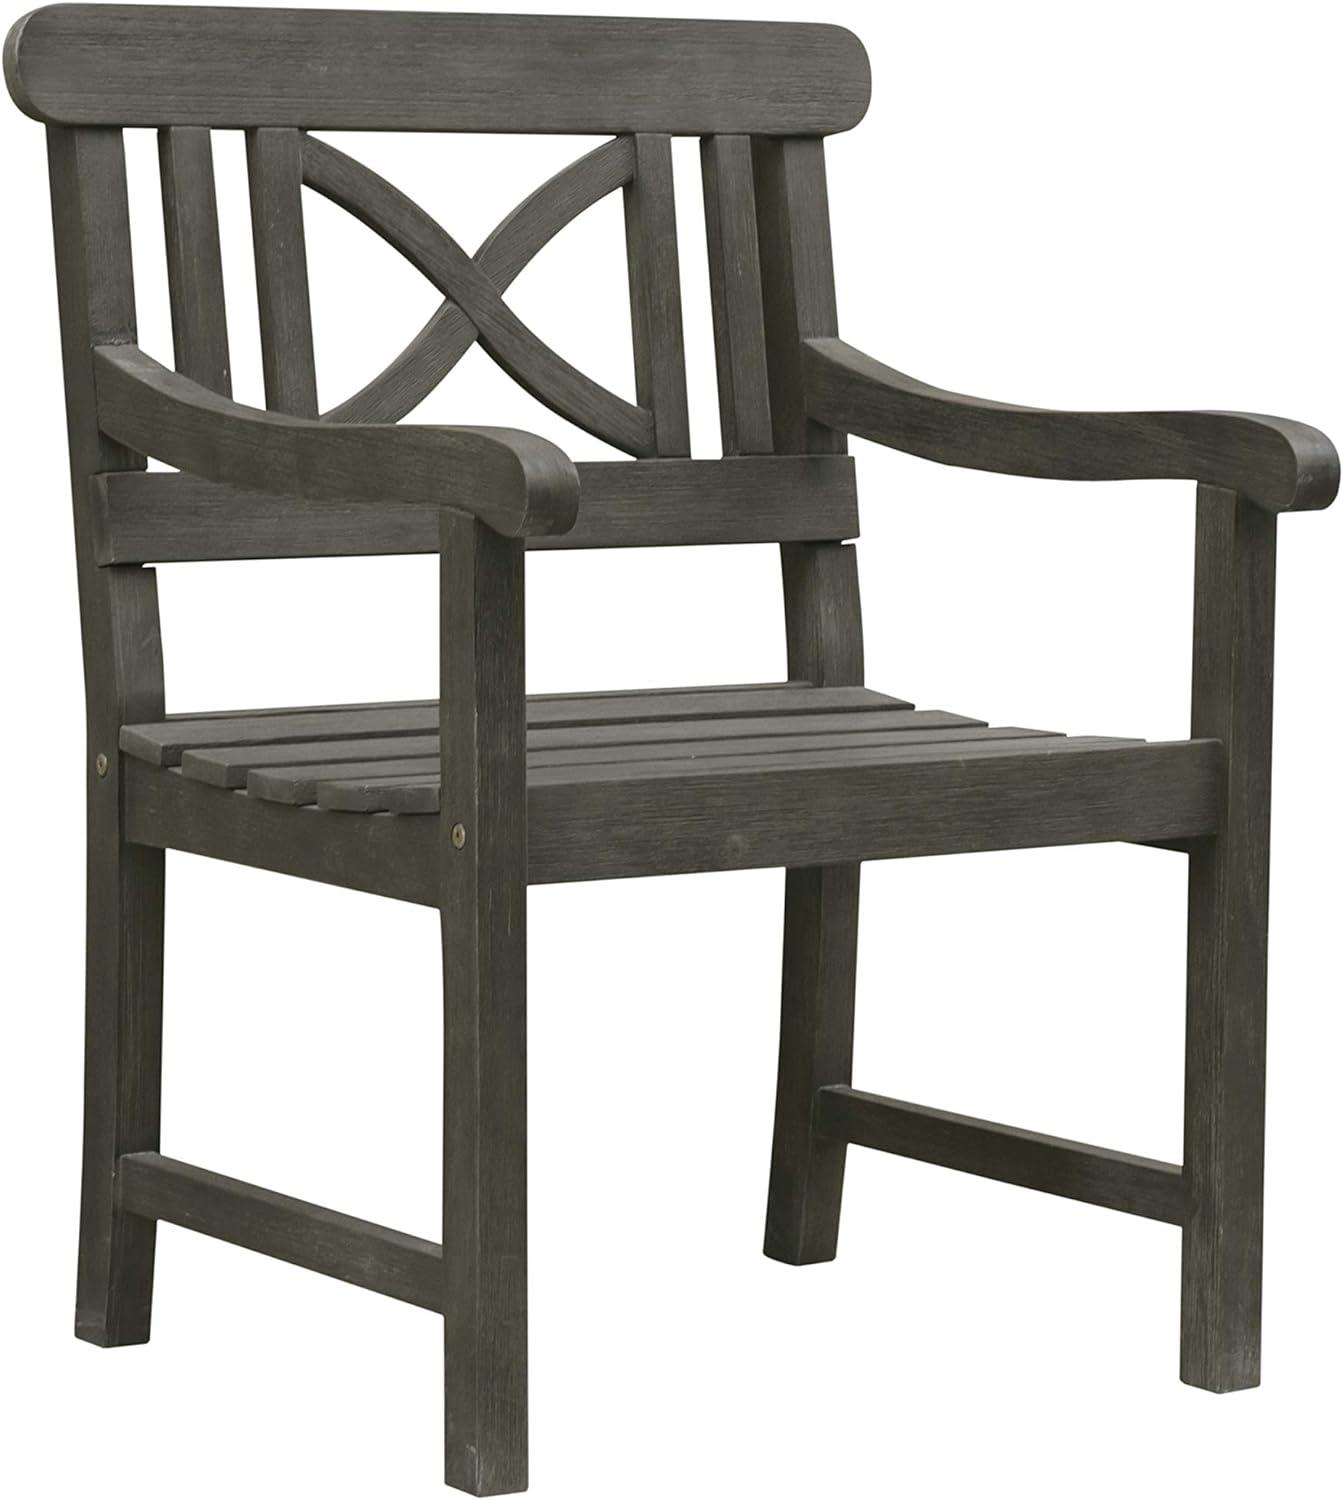 Renaissance Hand-Scraped Acacia Hardwood Outdoor Dining Chair